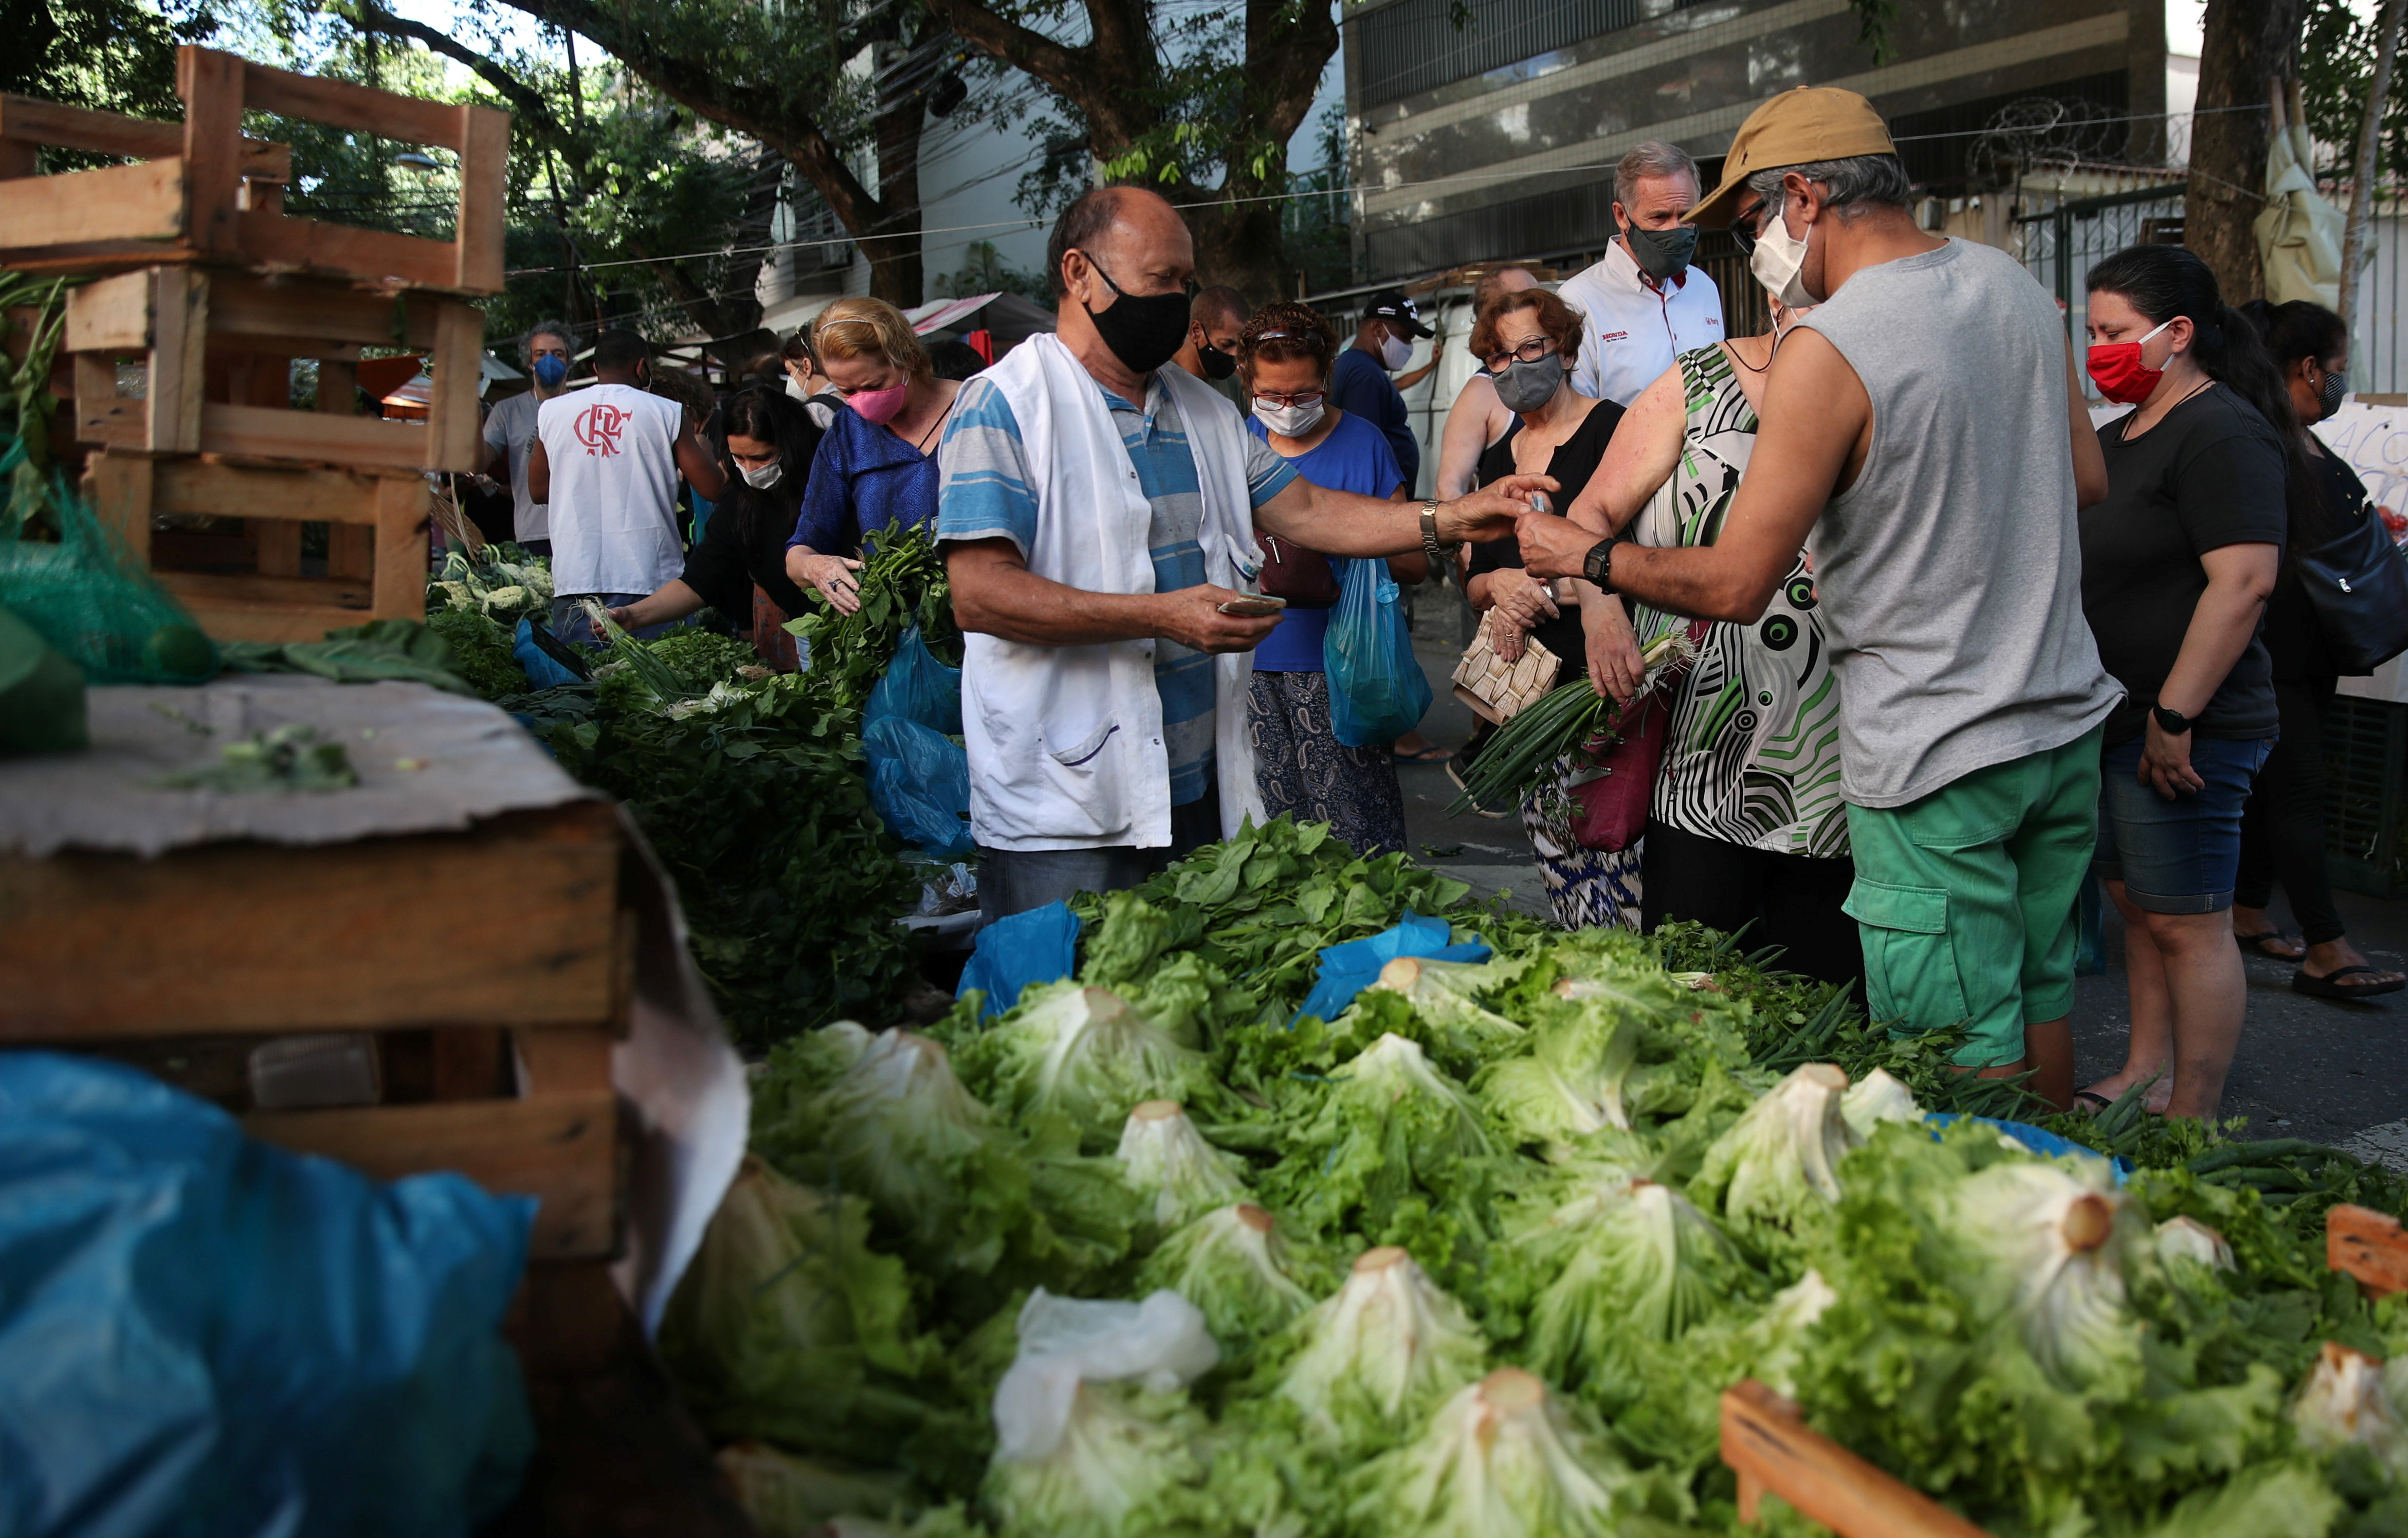 Consumers shop at a weekly street market in Rio de Janeiro